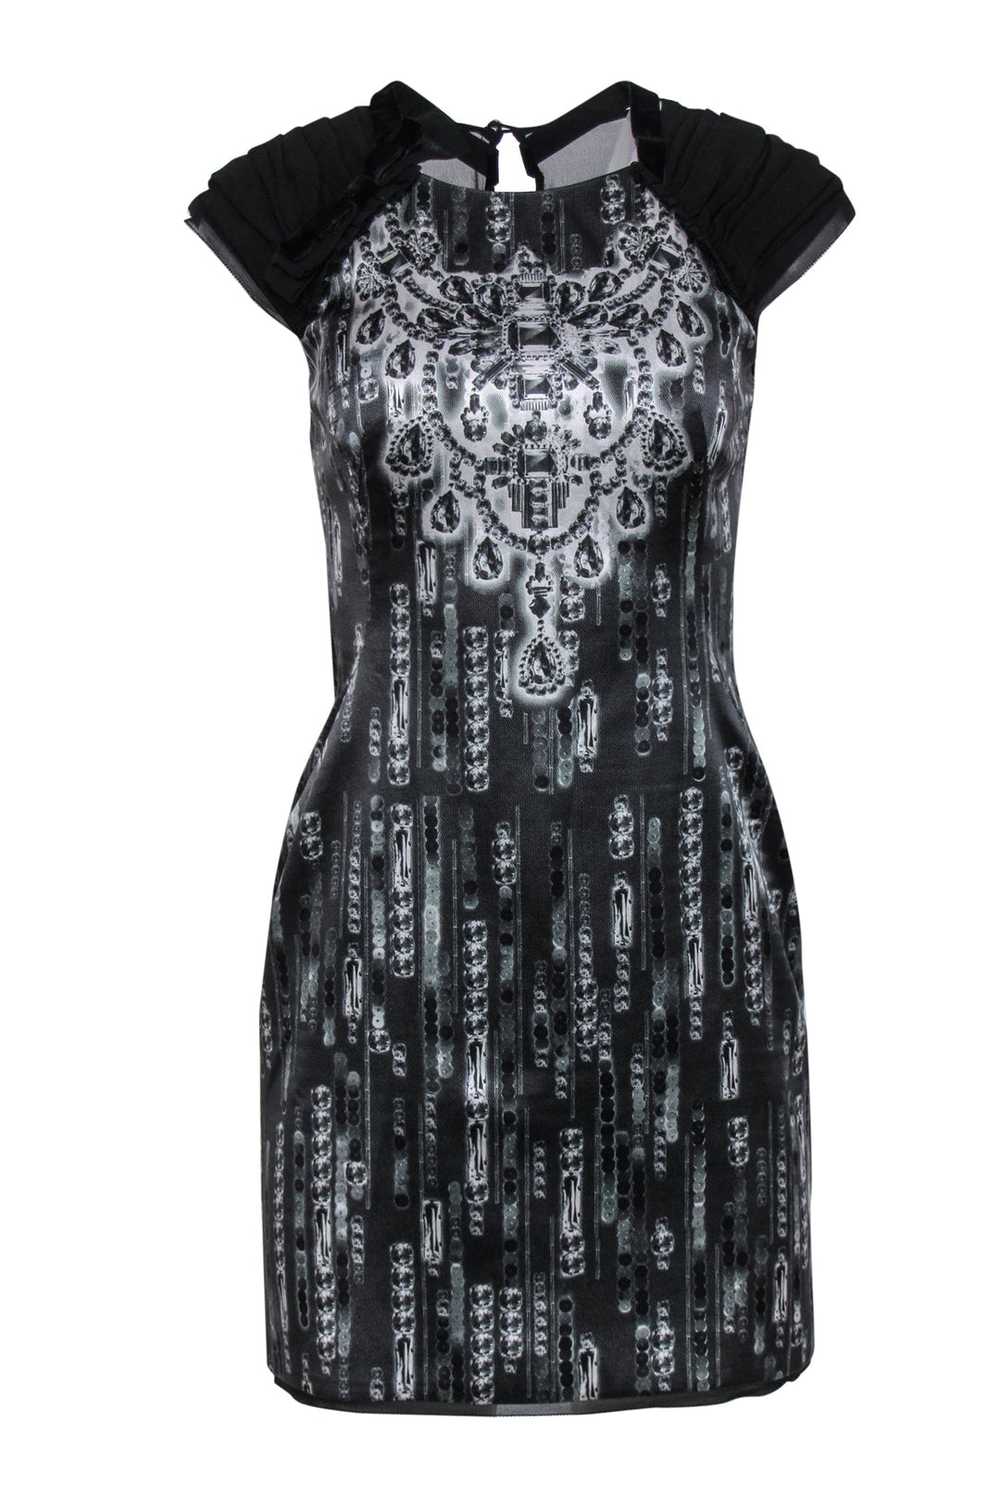 Karen Millen - Black Diamond Print Sheath Dress w… - image 1